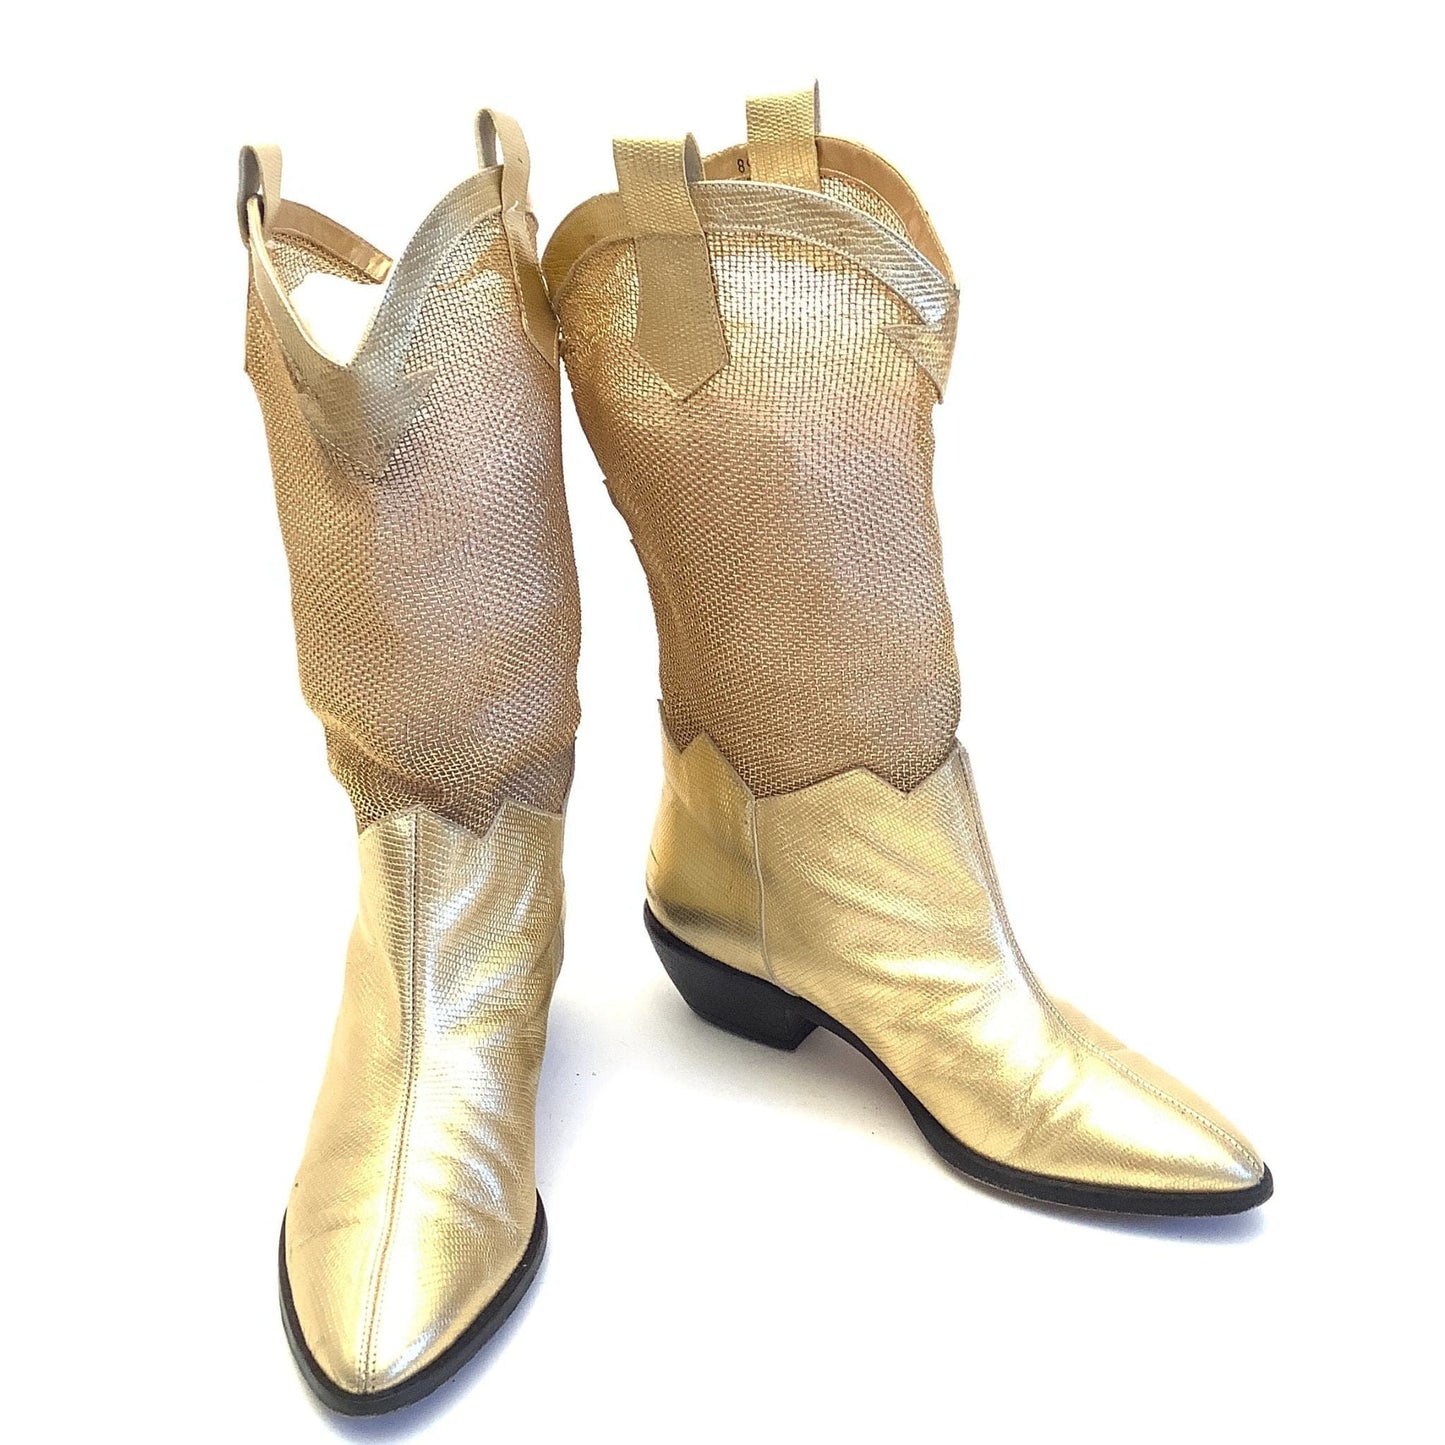 Vintage Gold Cowboy Boots 6 / Gold / Vintage 1990s